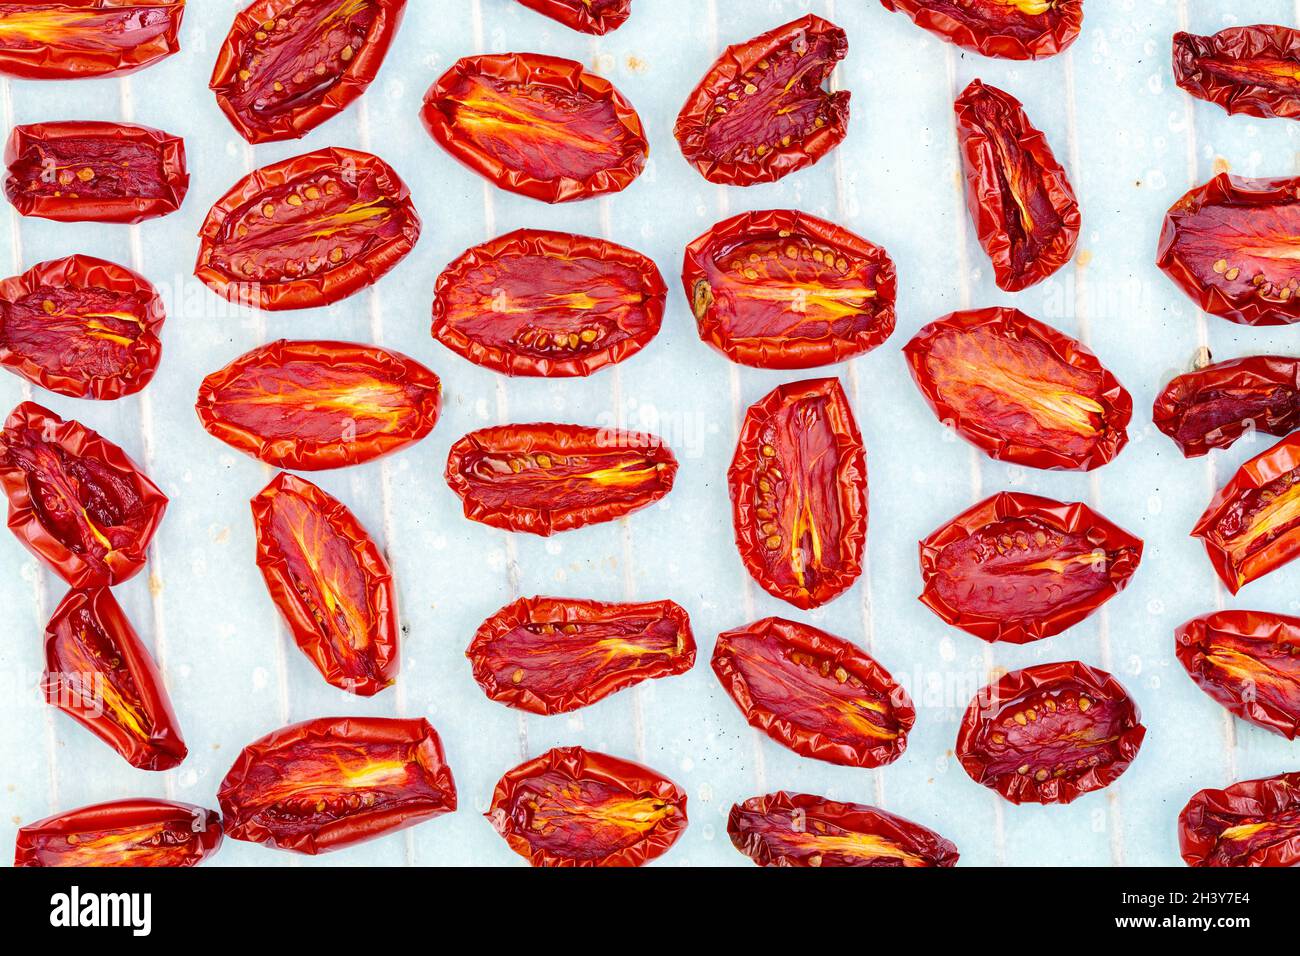 Mitades de tomate secas. Foto de stock